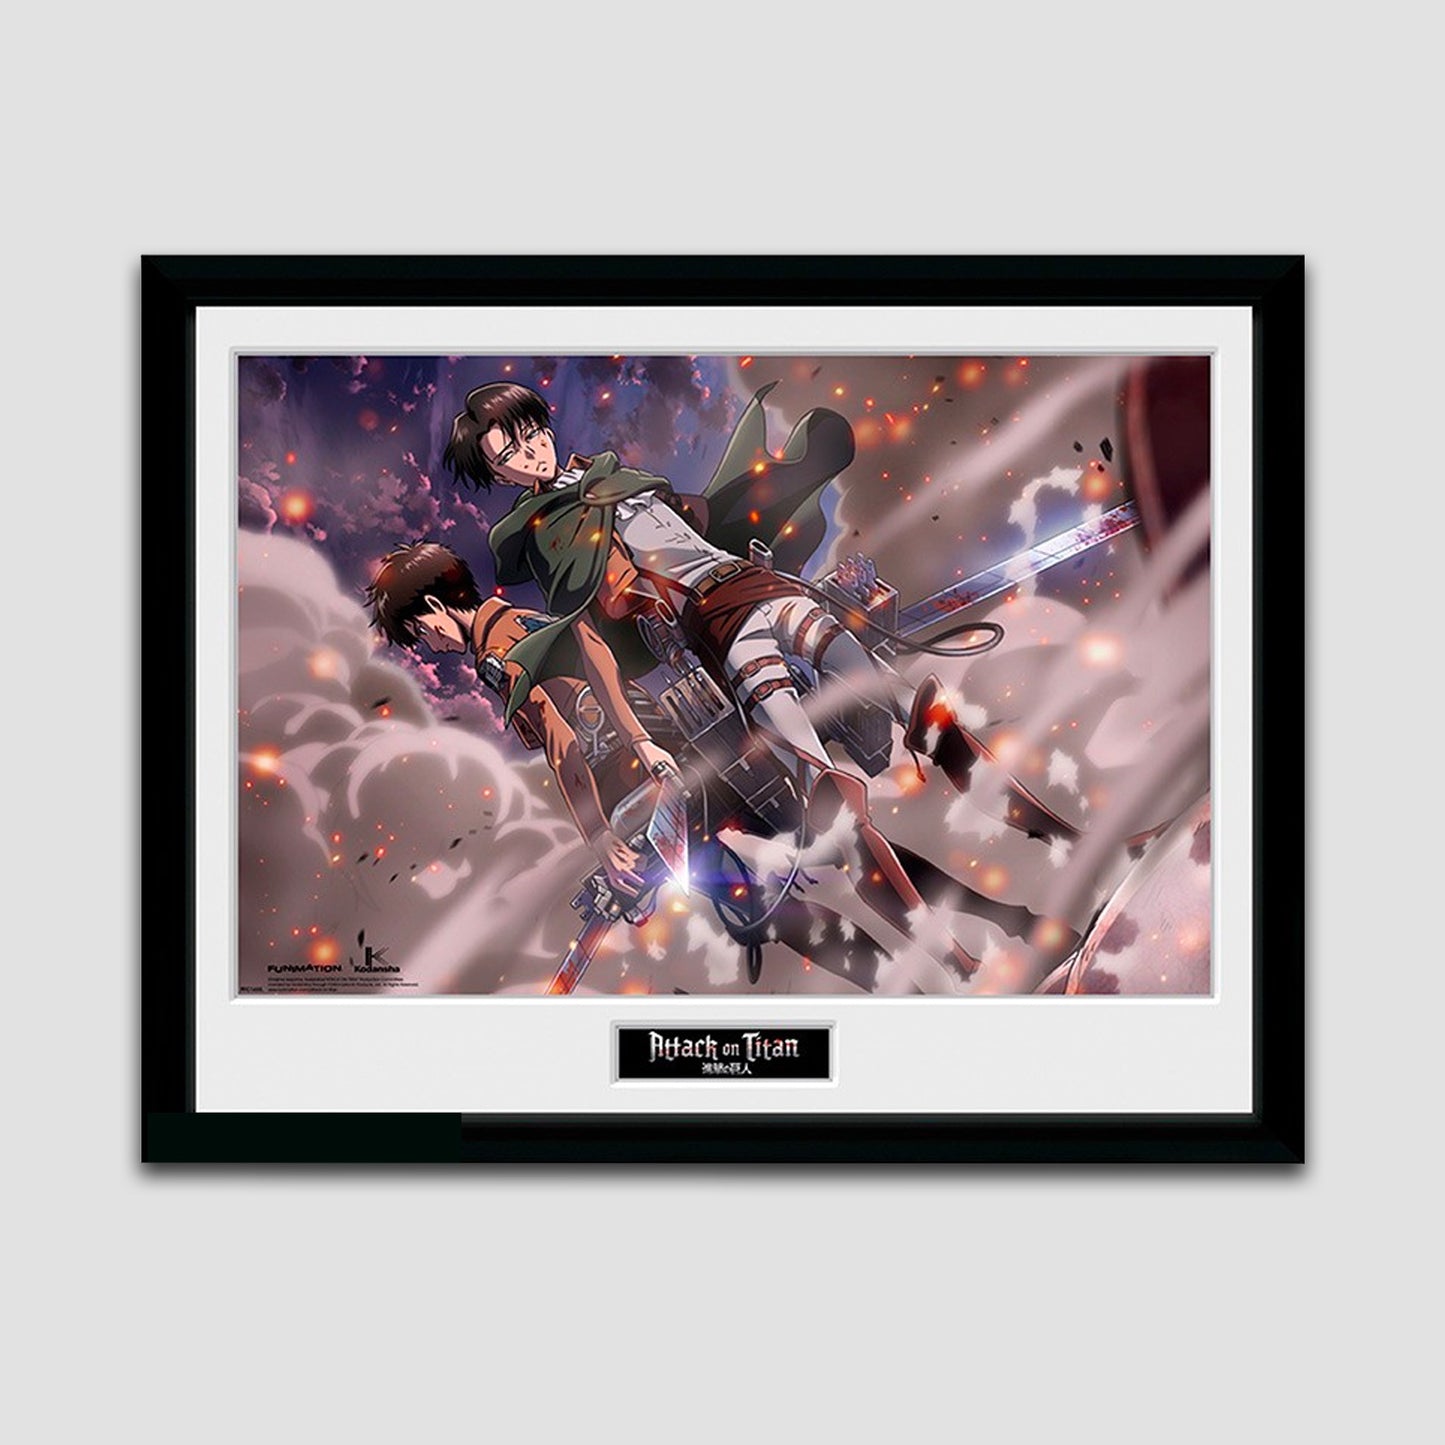 Eren and Levi "Smoke Blast" (Attack on Titan) Framed Art Print